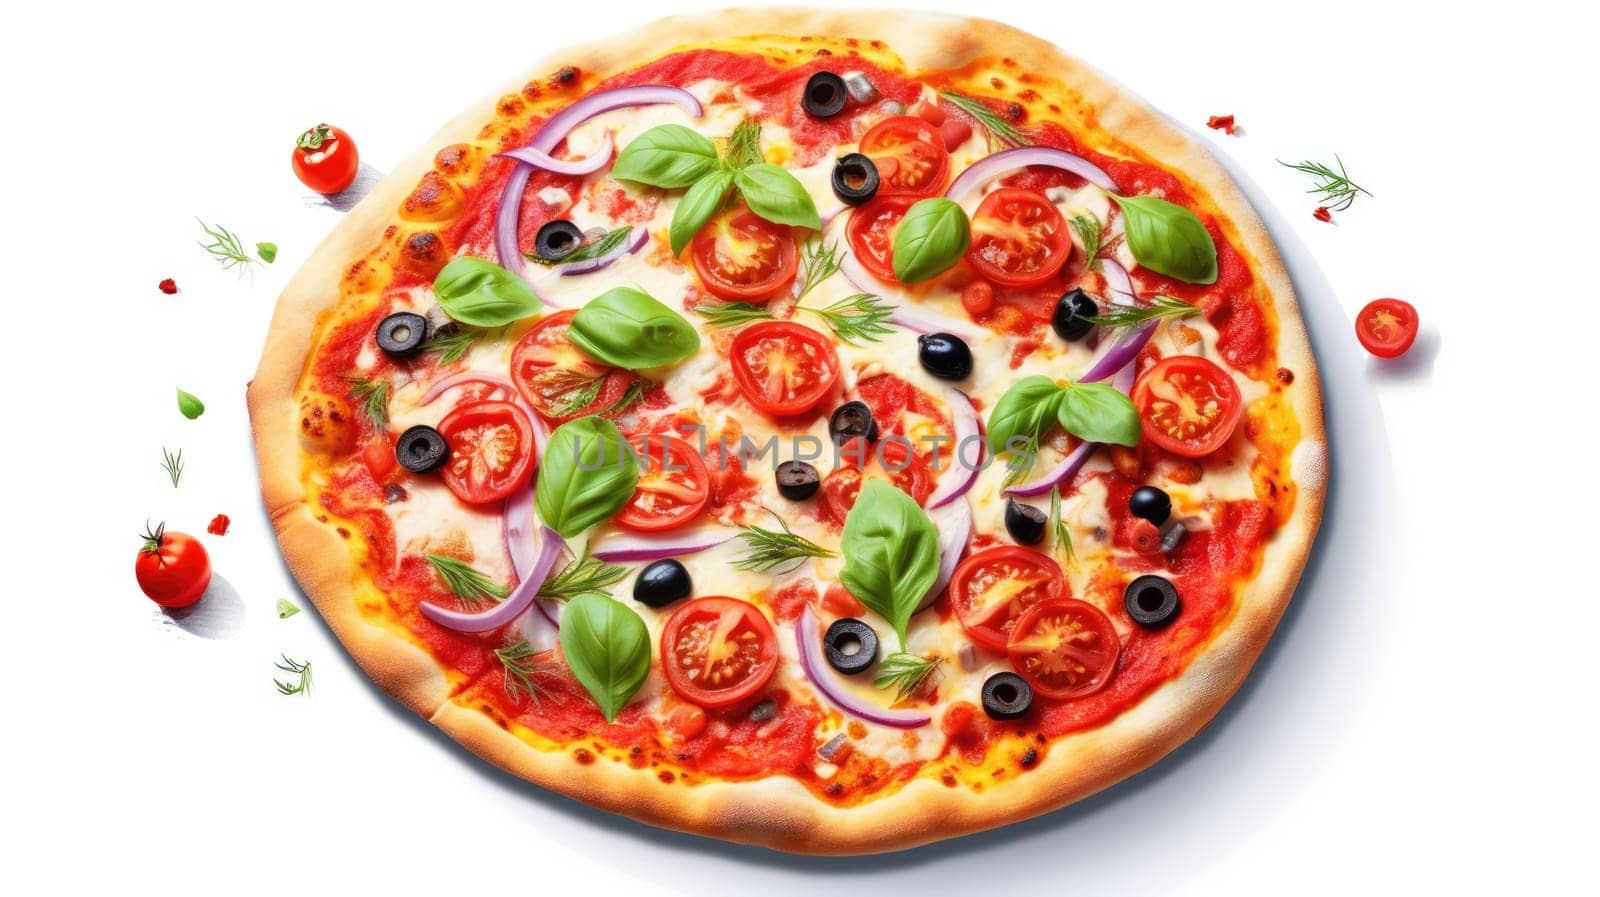 Gourmet pizza photo realistic illustration - AI generated. Pizza, tomato, sauce, basil.